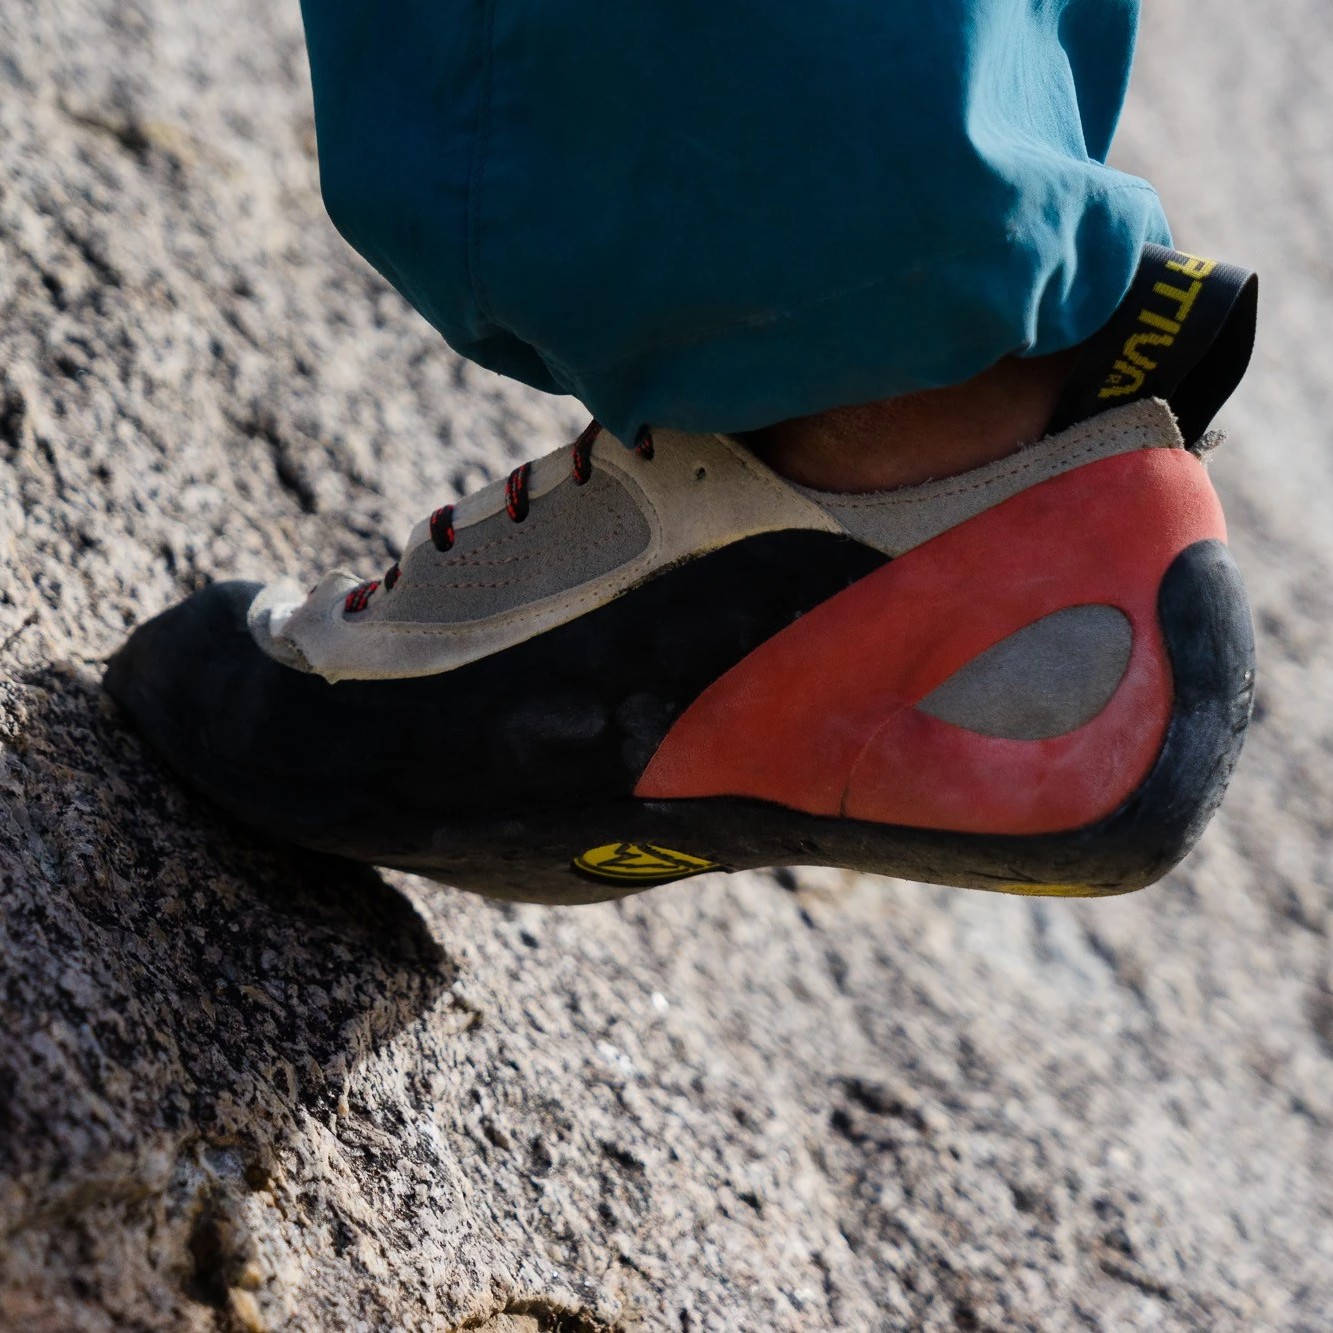 La Sportiva Finale Rock Climbing Shoes